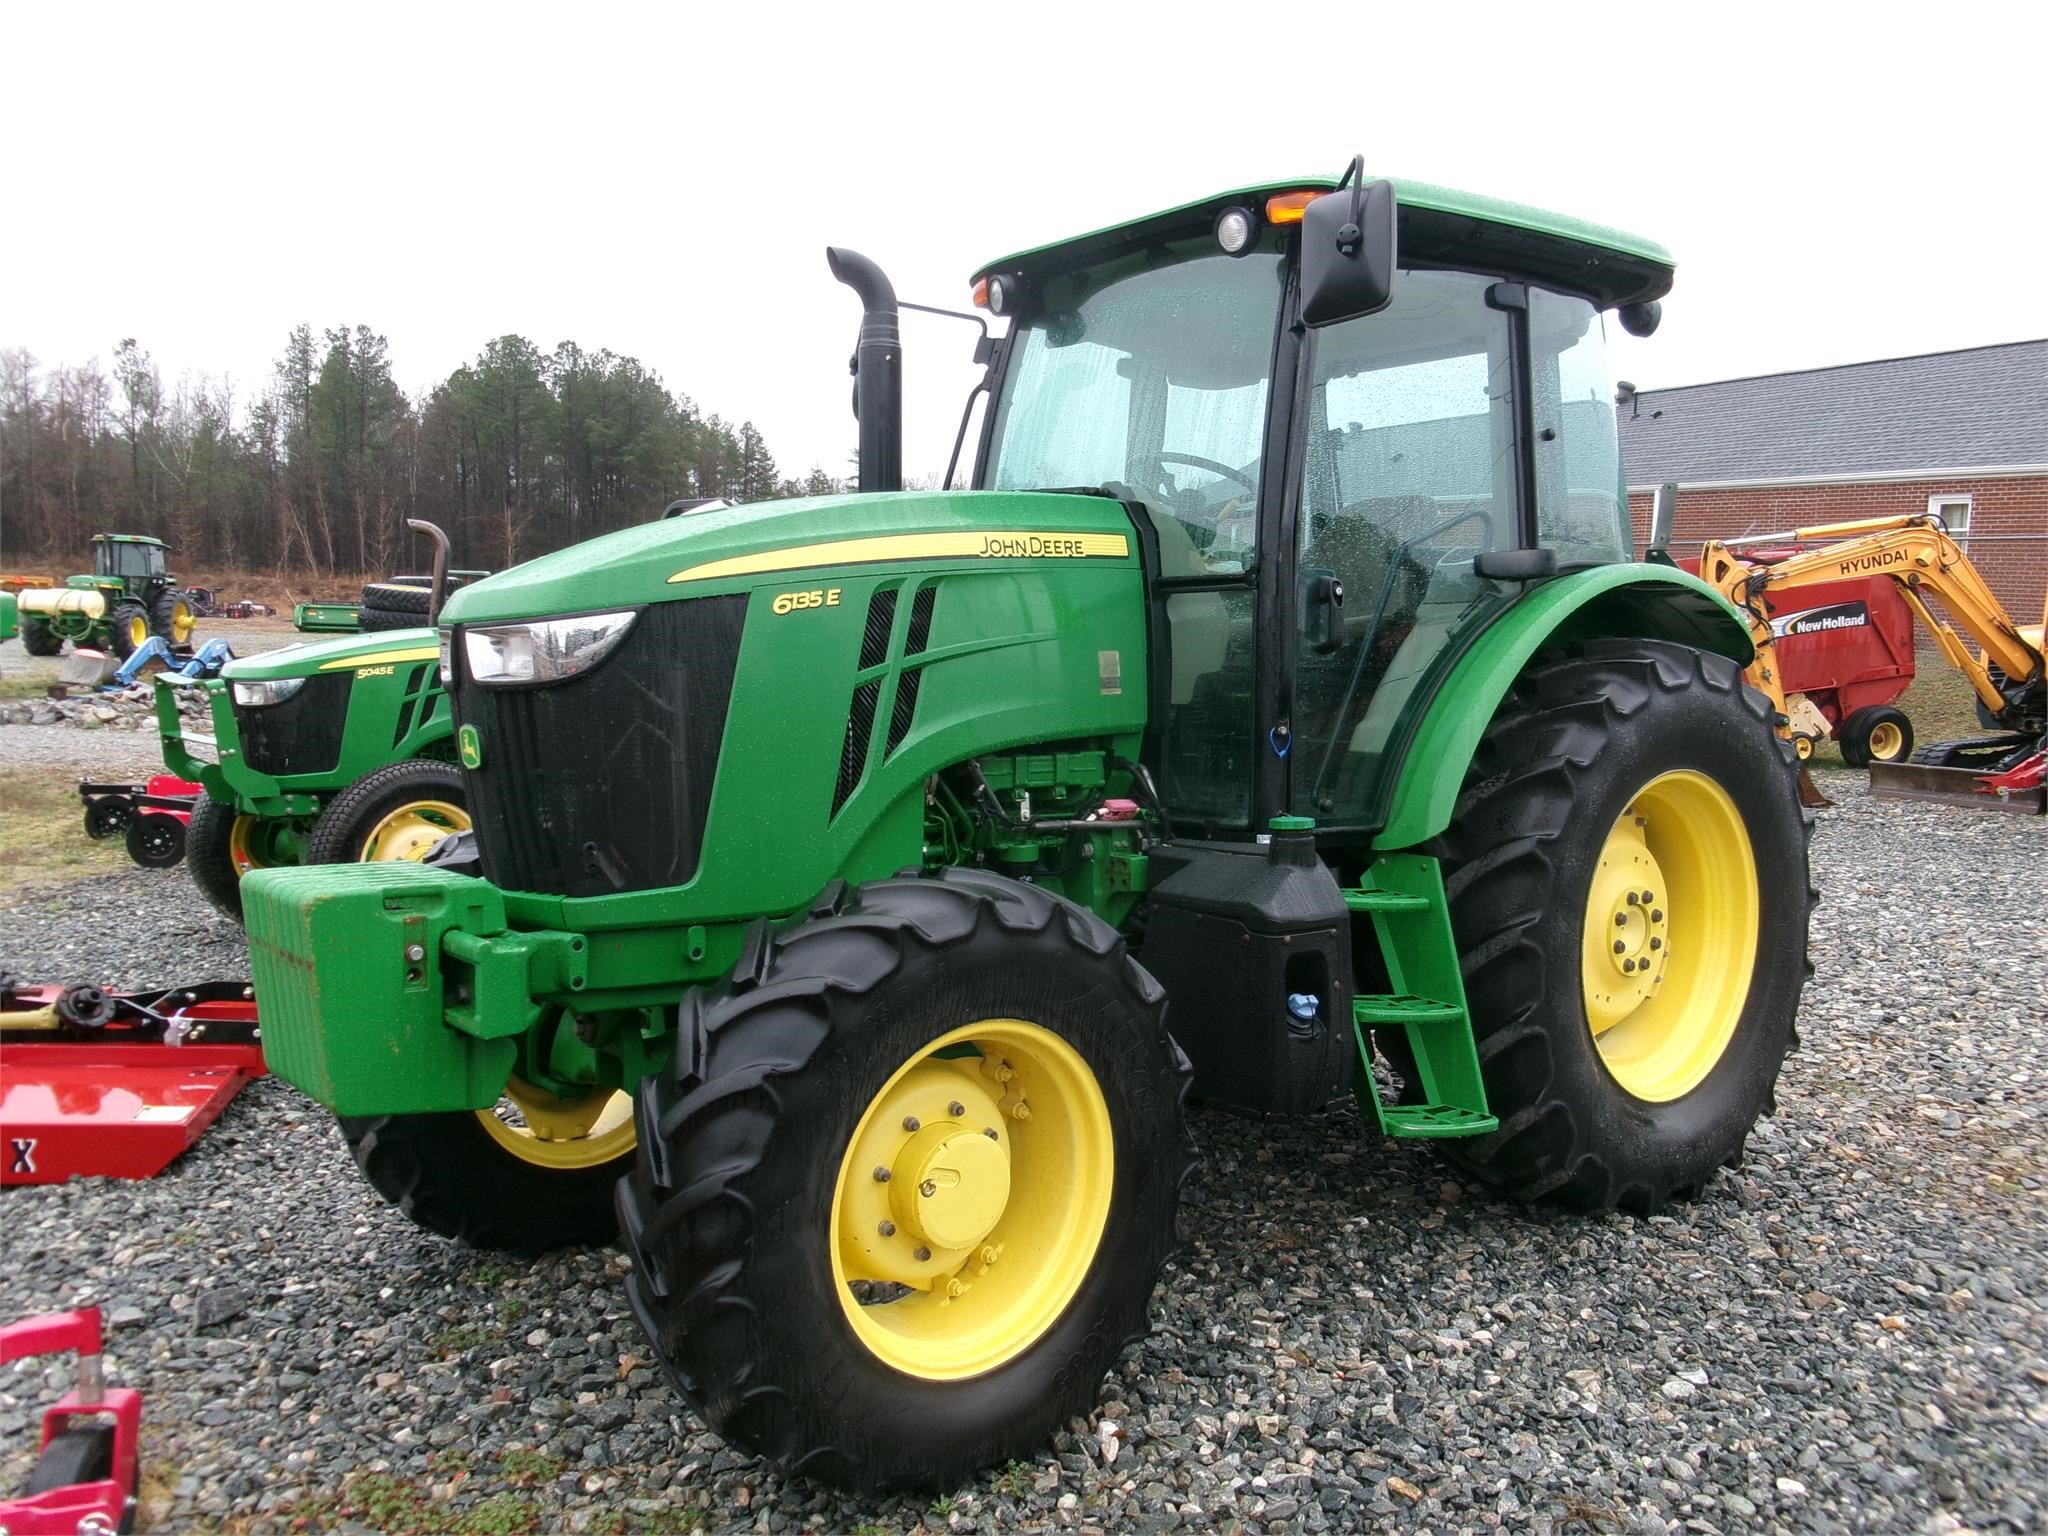 Tractors For Sale By T & J Farm Equipment Sales Inc. - 40 Listings